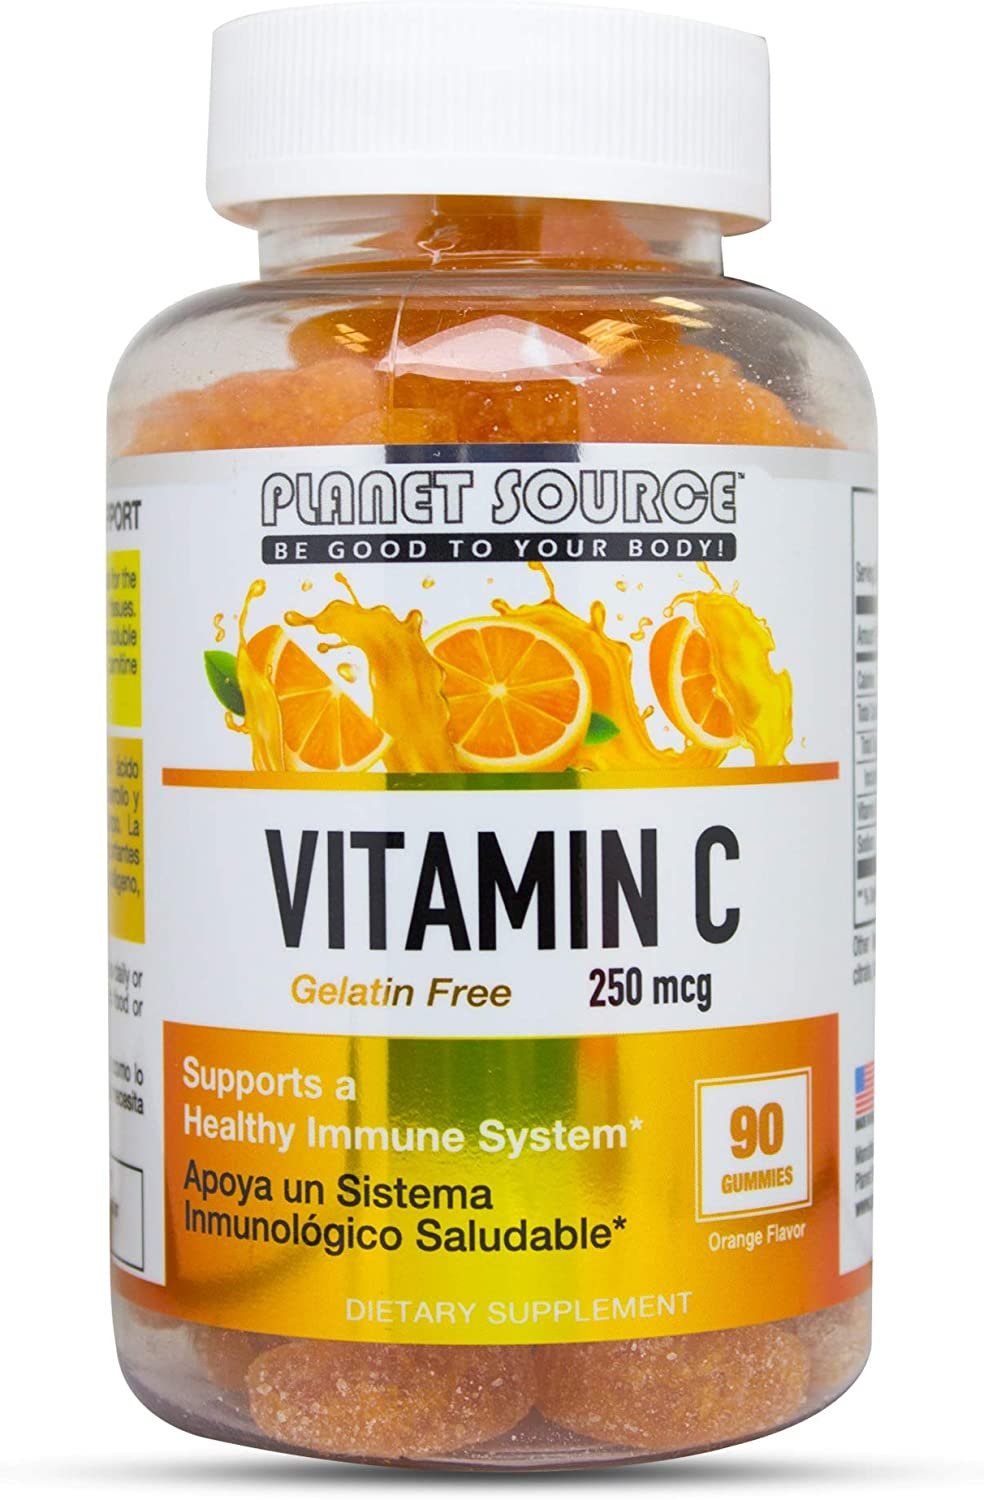 Vitamin C Gummies - Immune Support Gummies - Gelatin-Free & Gluten-Free Vitamin C Supplement - Orange Flavor 250 MGS of Chewable Vitamins - 90 Count Vitamin C Gummies for Adults and Kids